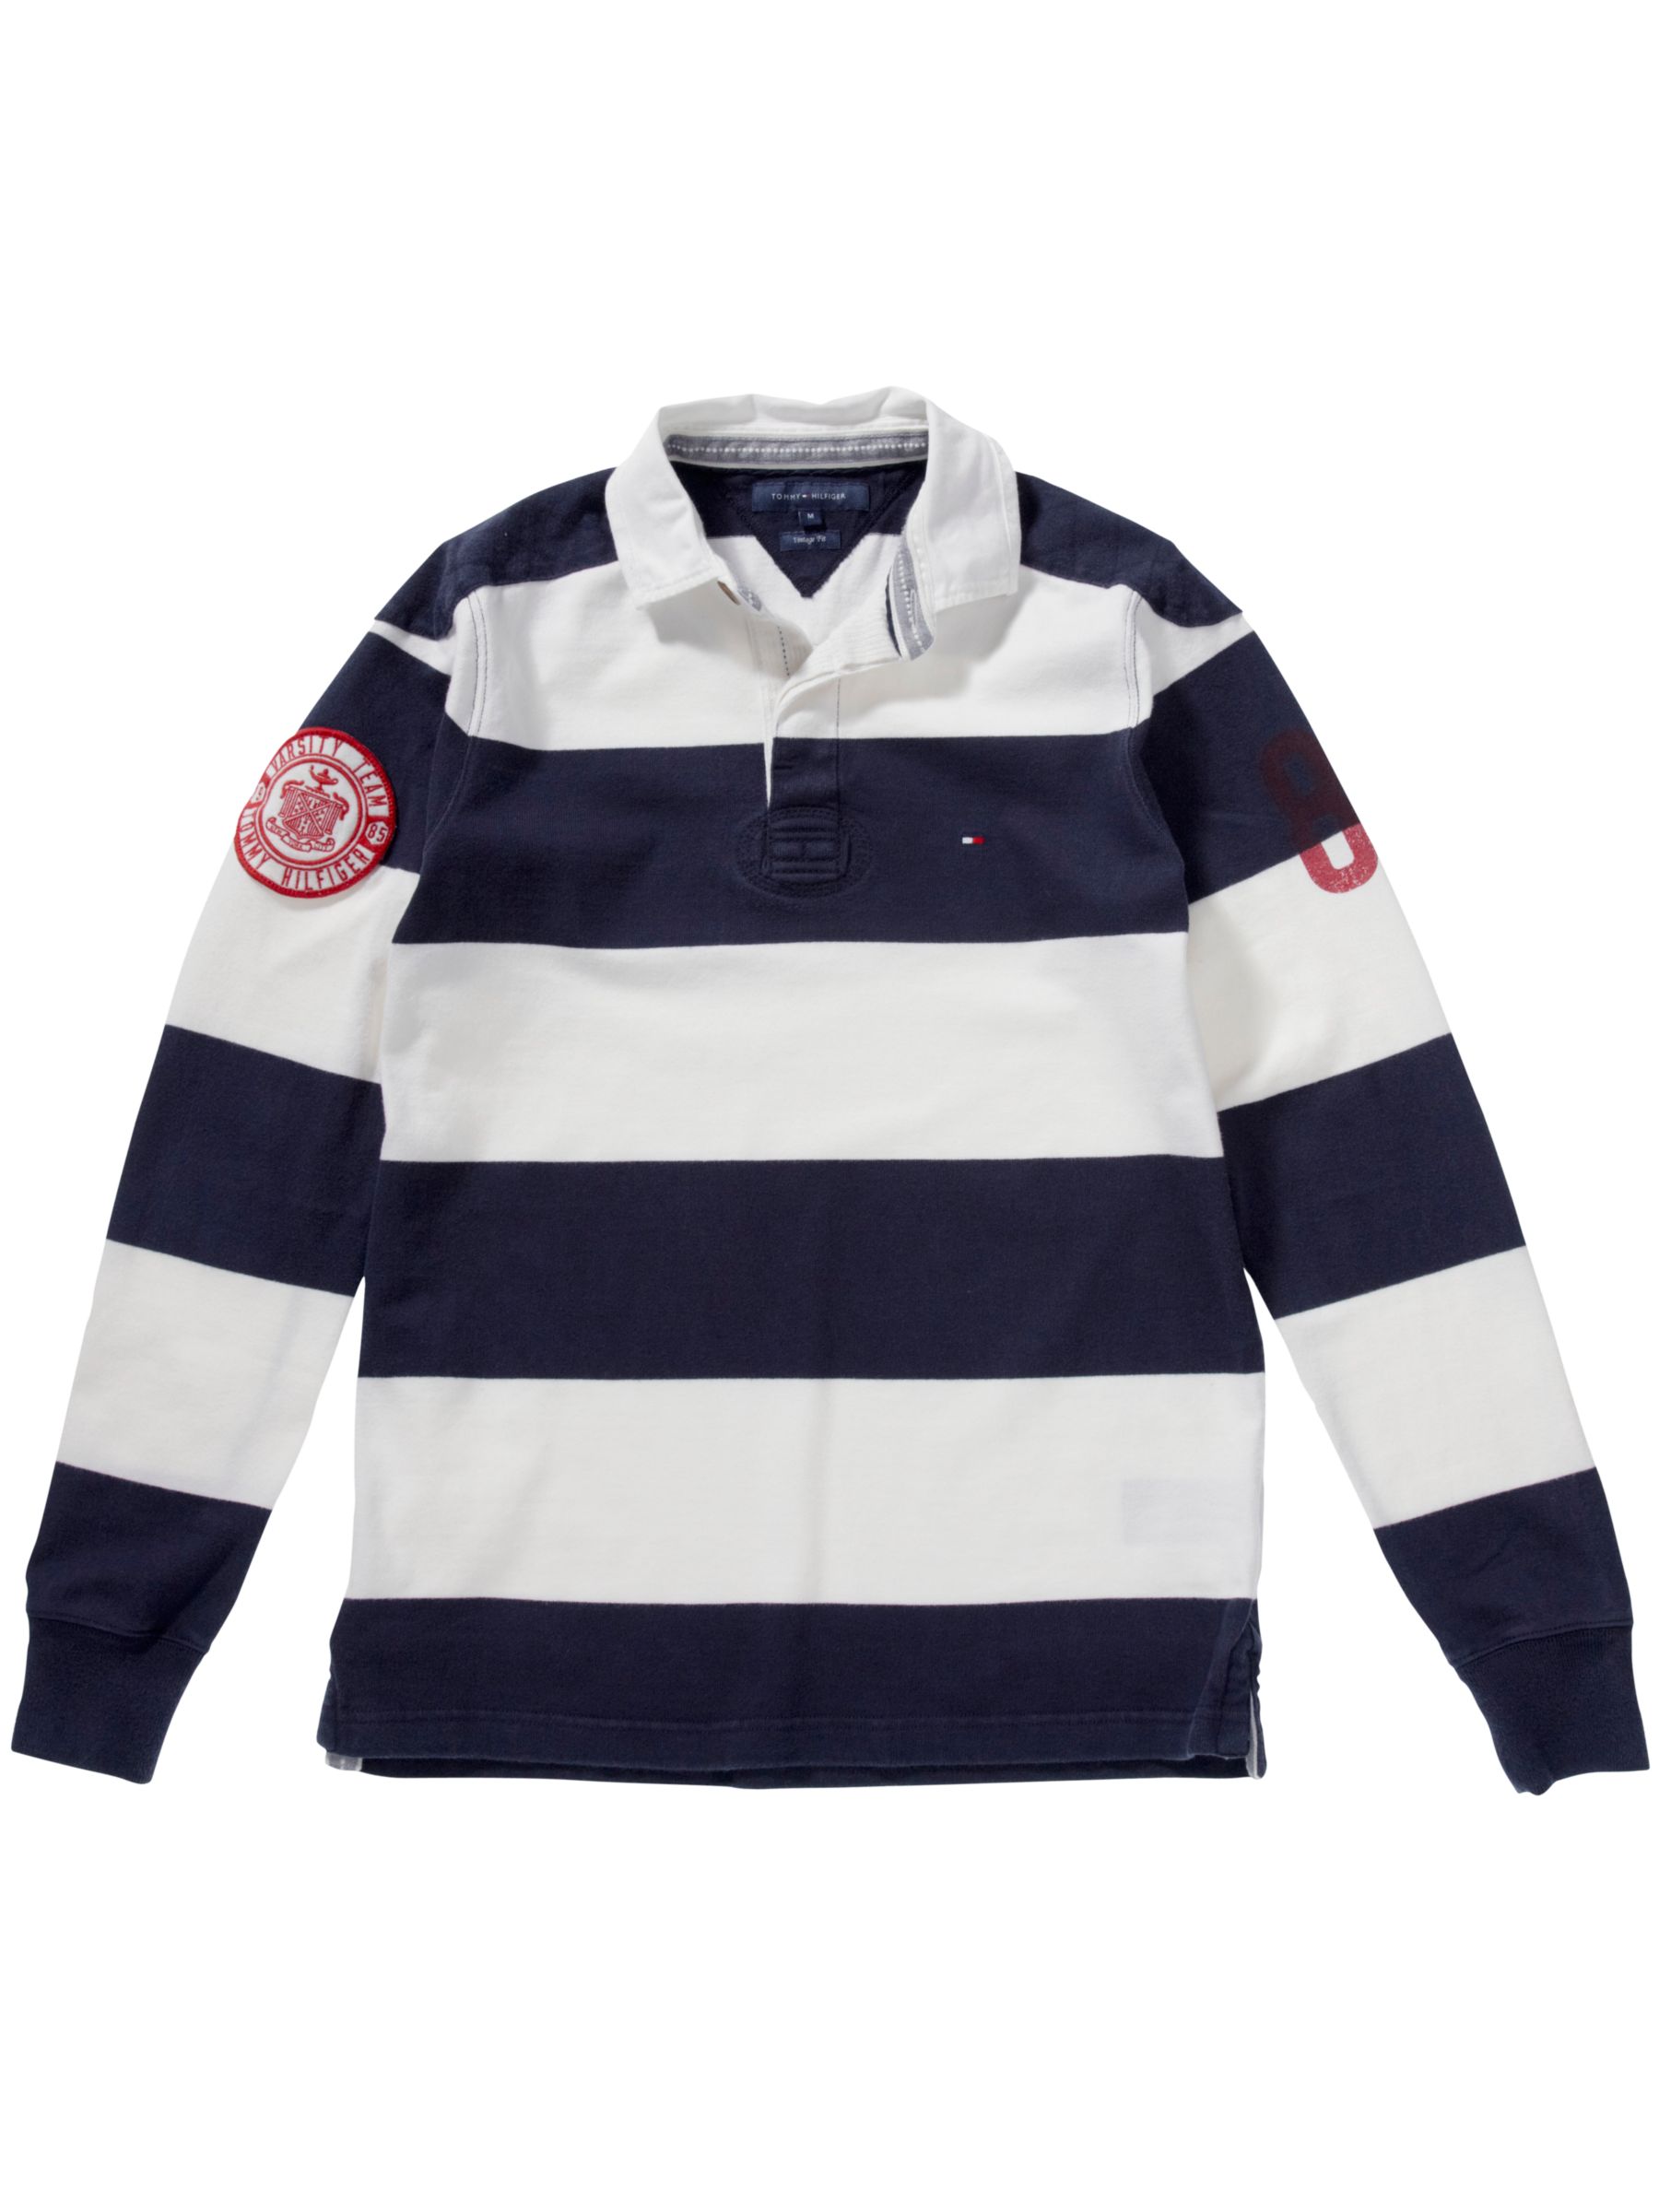 Dandy Stripe Rugby Shirt,